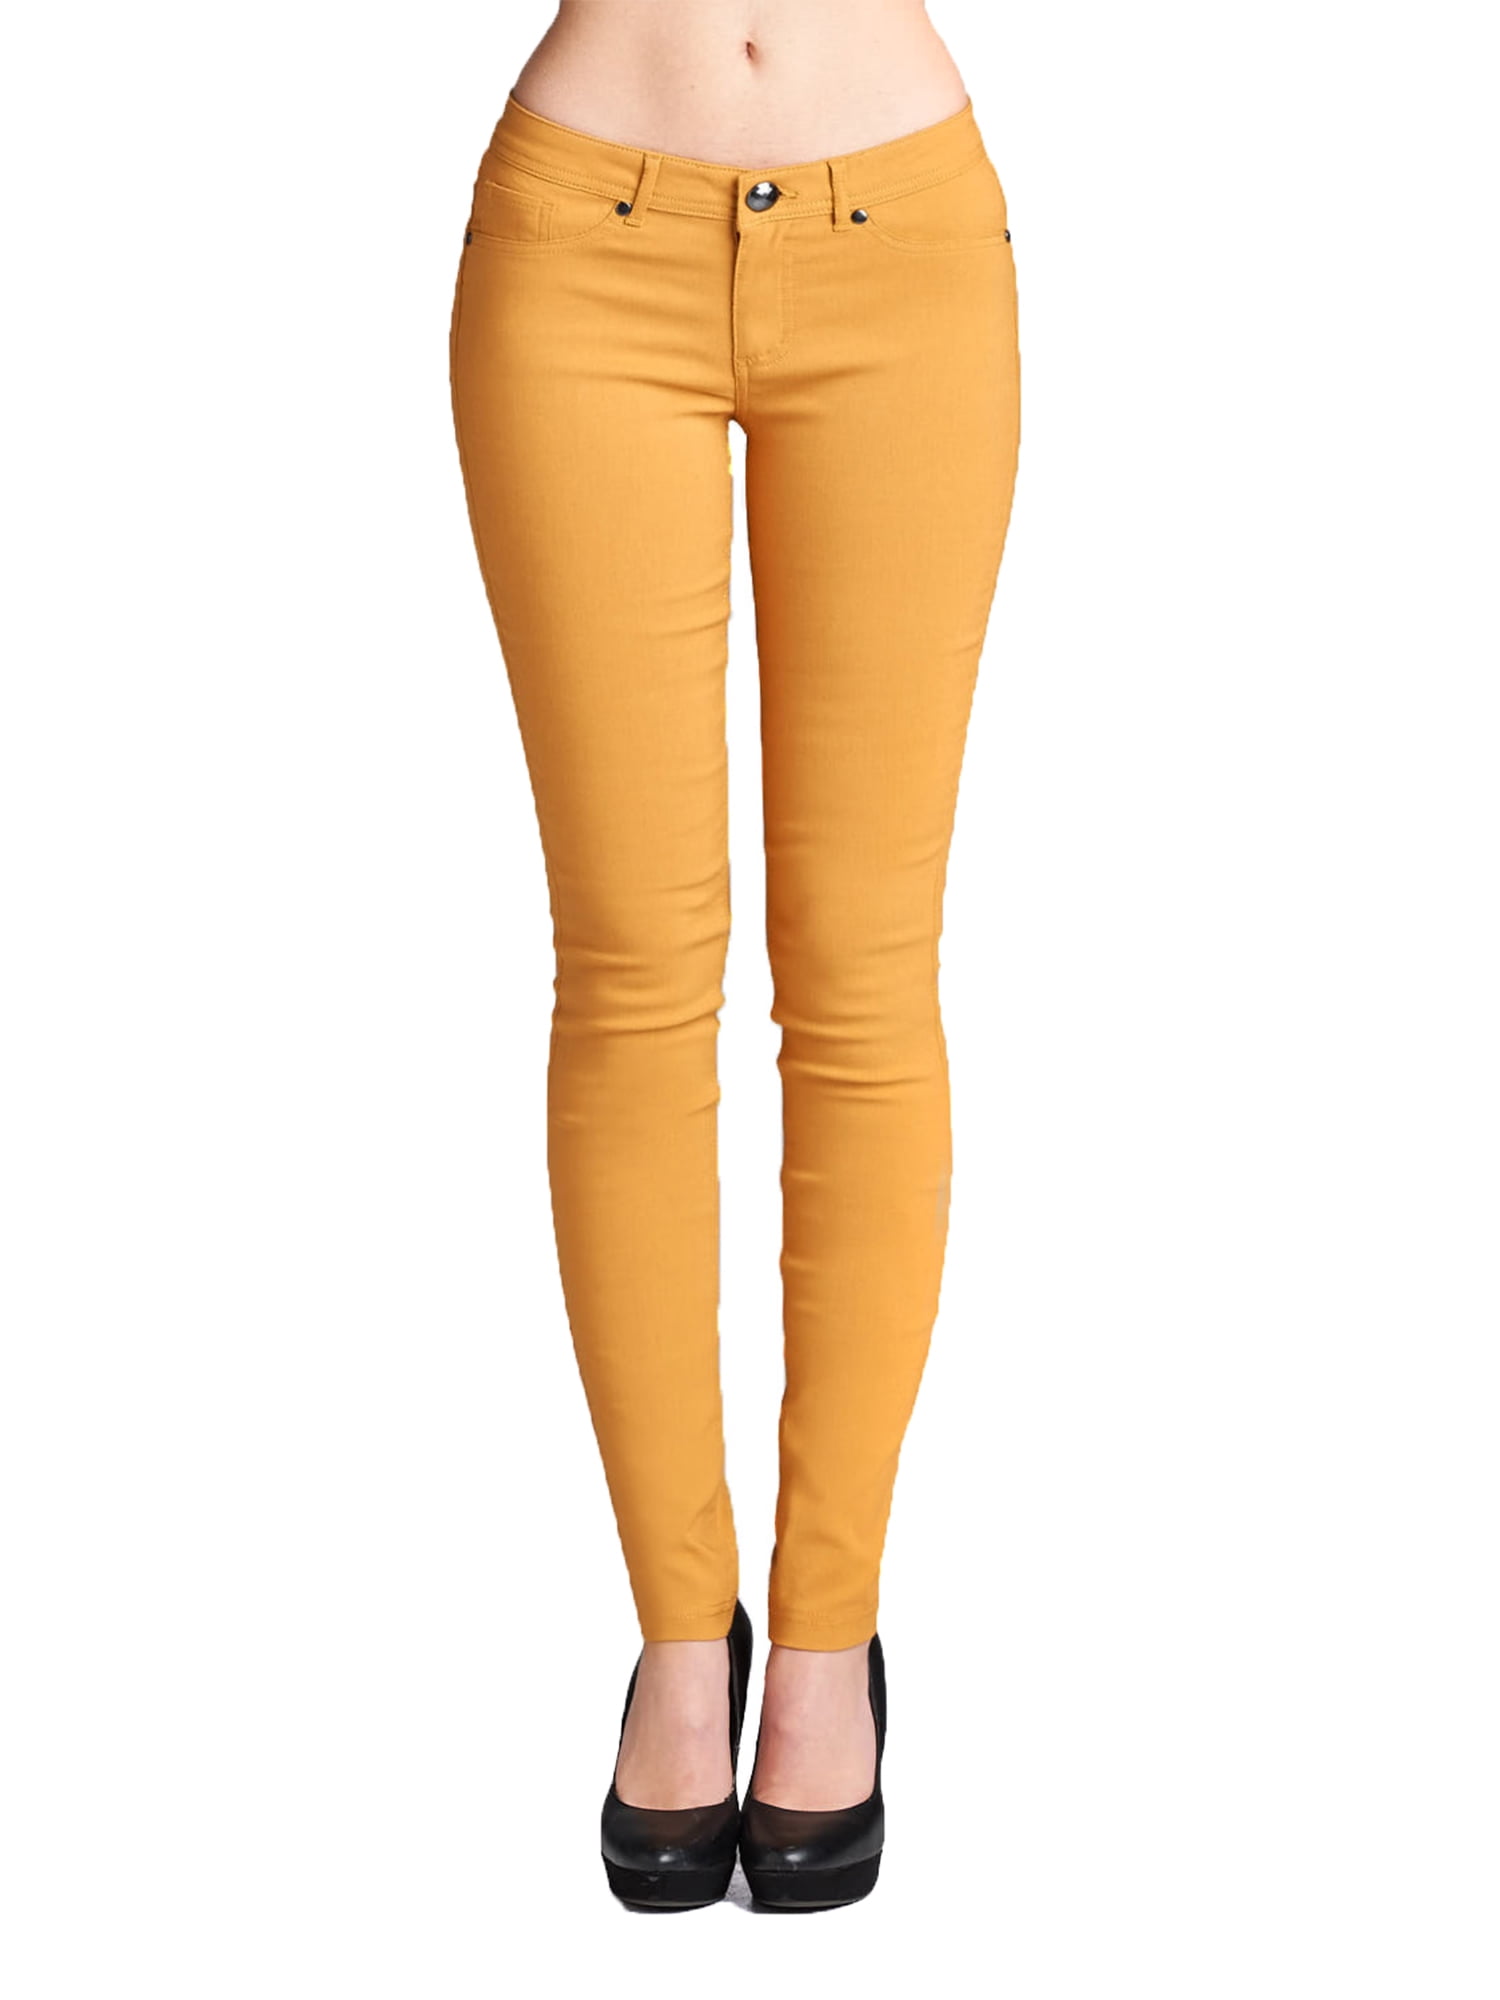 Leggings Jeggings Collection Starting Only 50/- #ajitzone #leggings  #manufacturer #trending #surat 